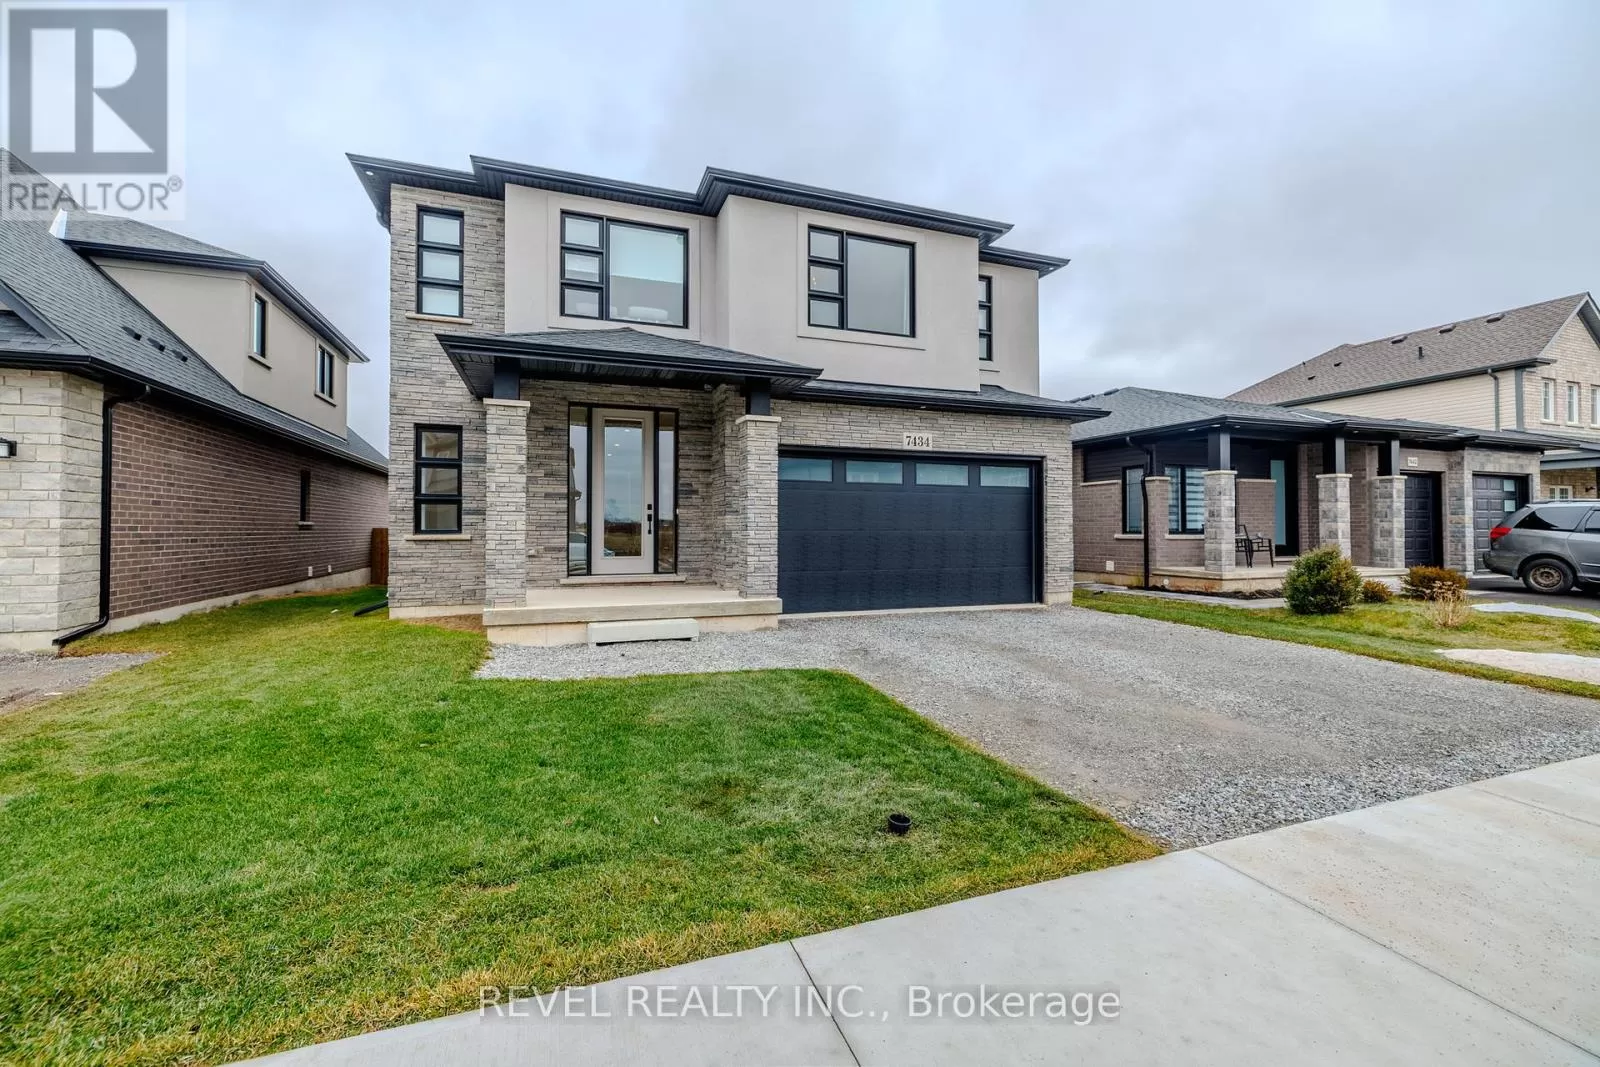 House for rent: 7434 Sherrilee Cres, Niagara Falls, Ontario L2H 3T4